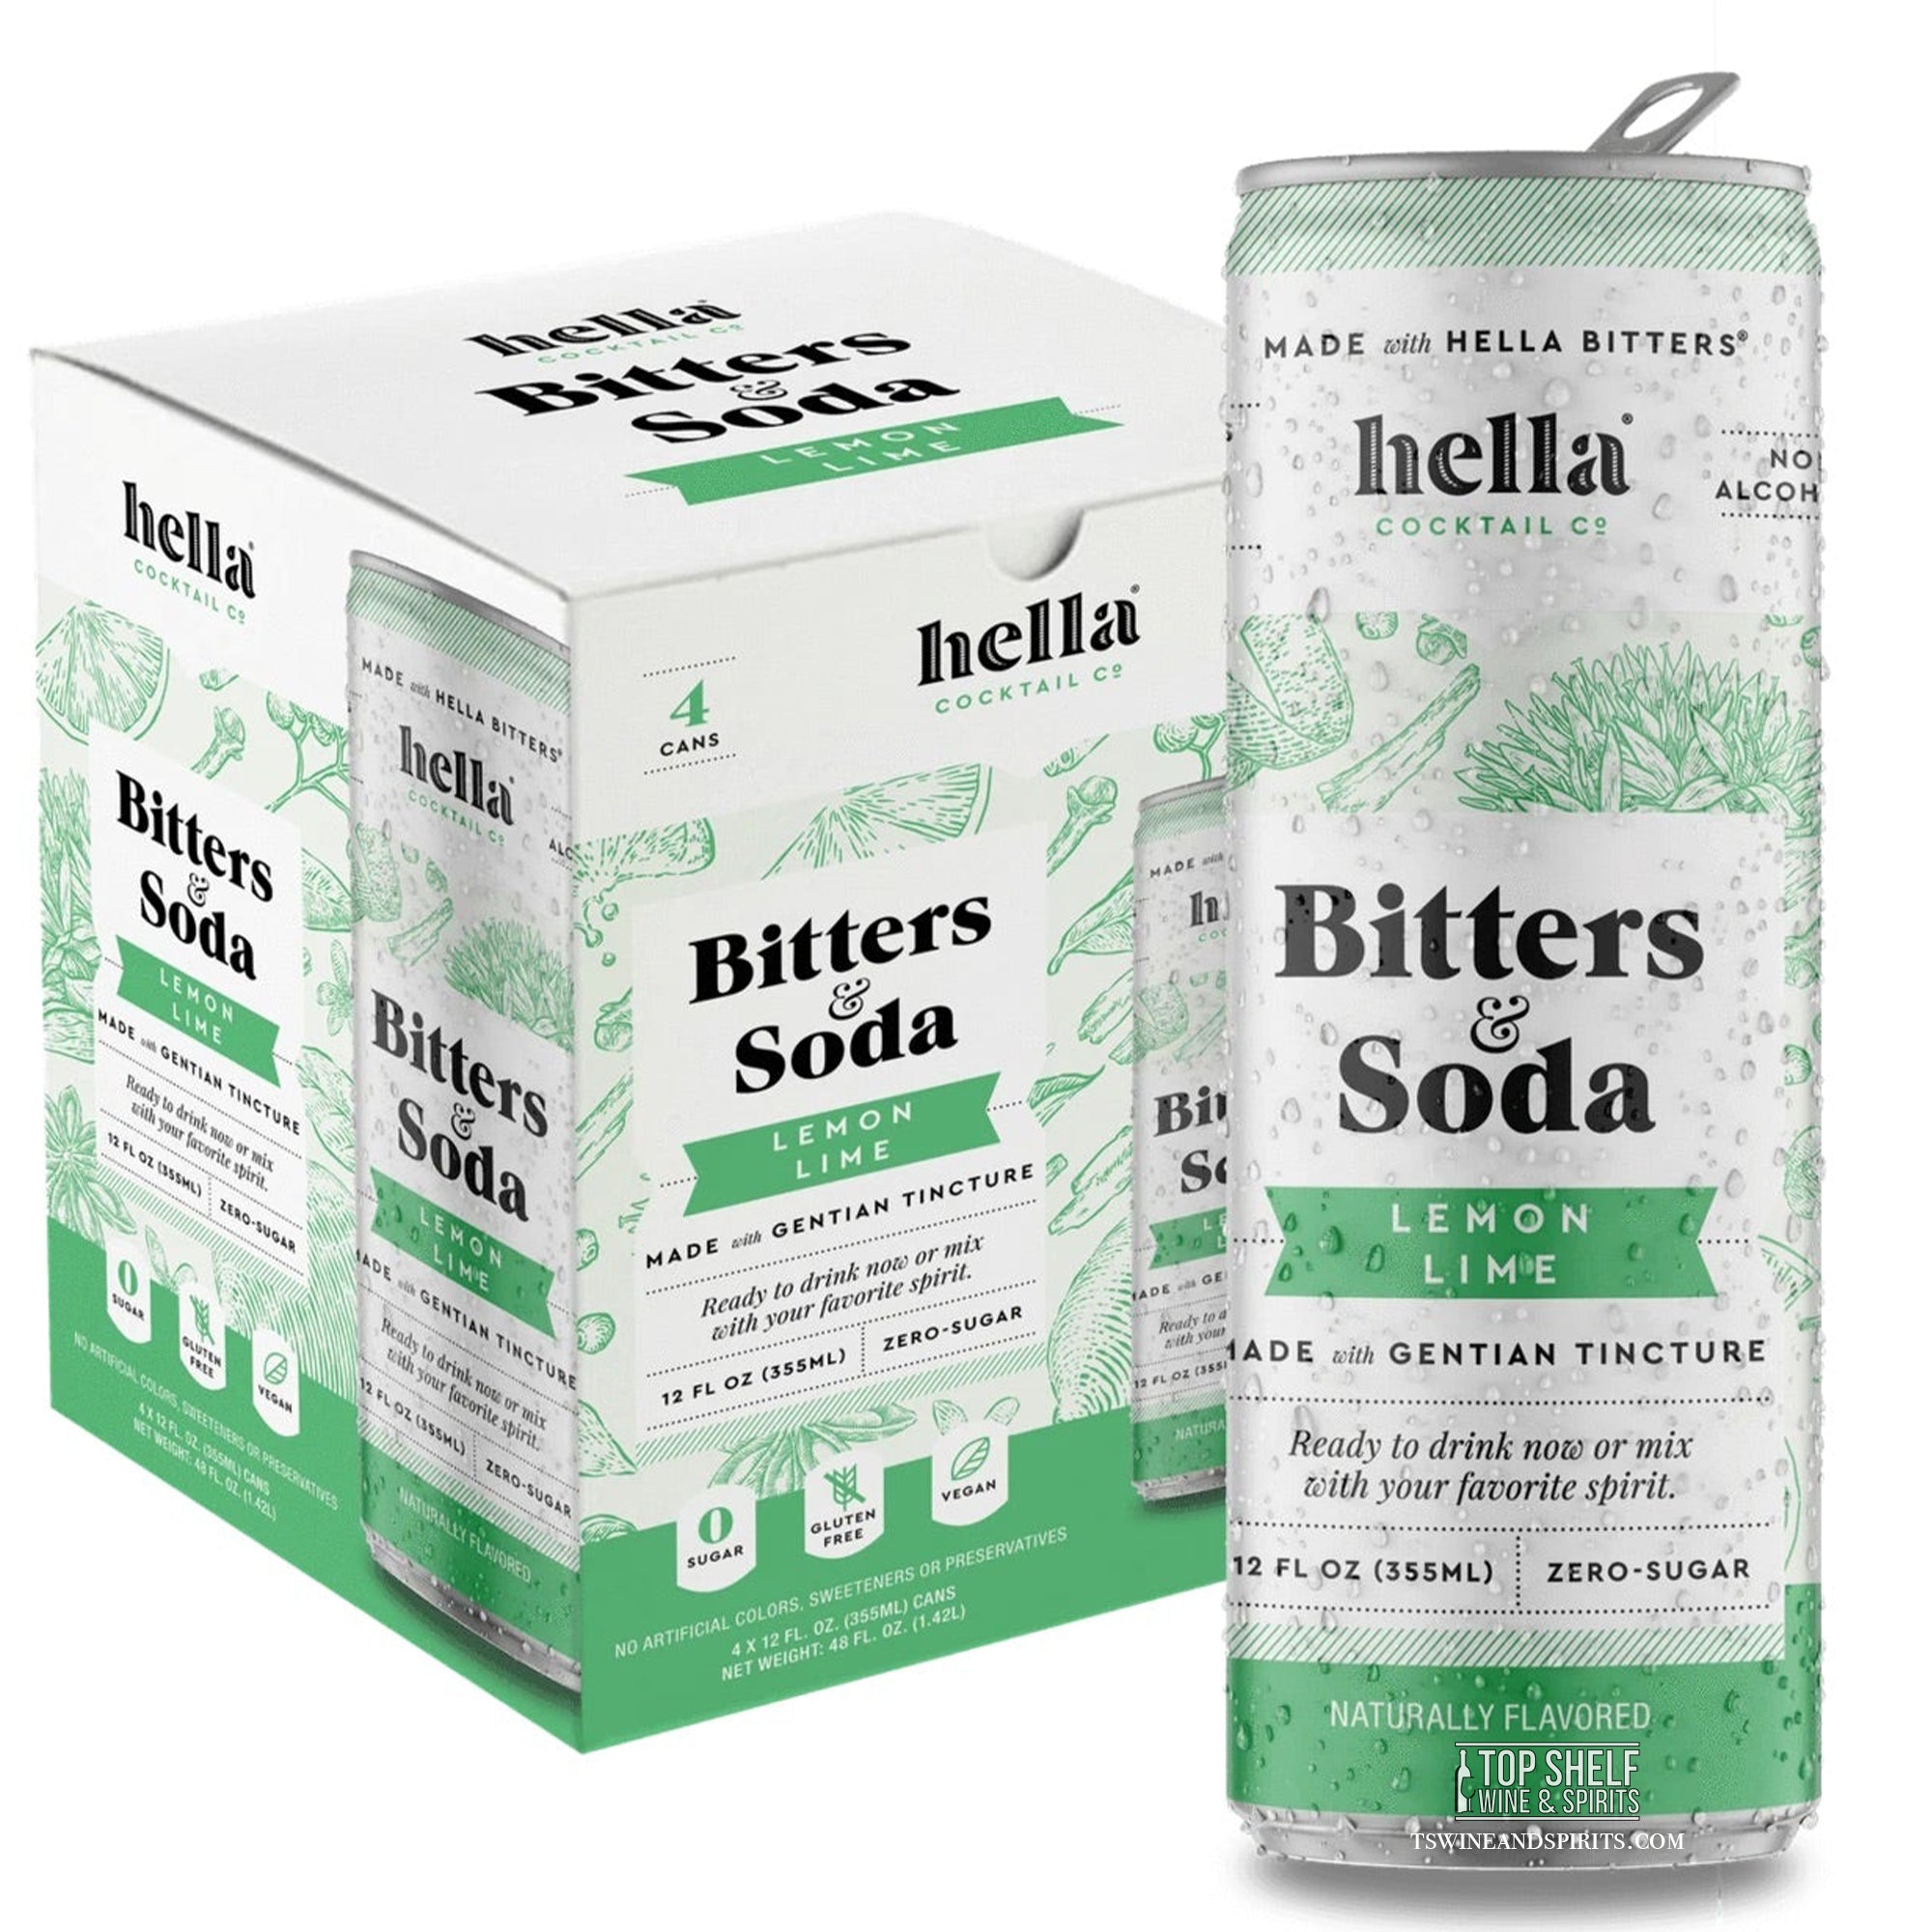 Hella Bitters & Soda Lemon Lime 4 Pack Cans